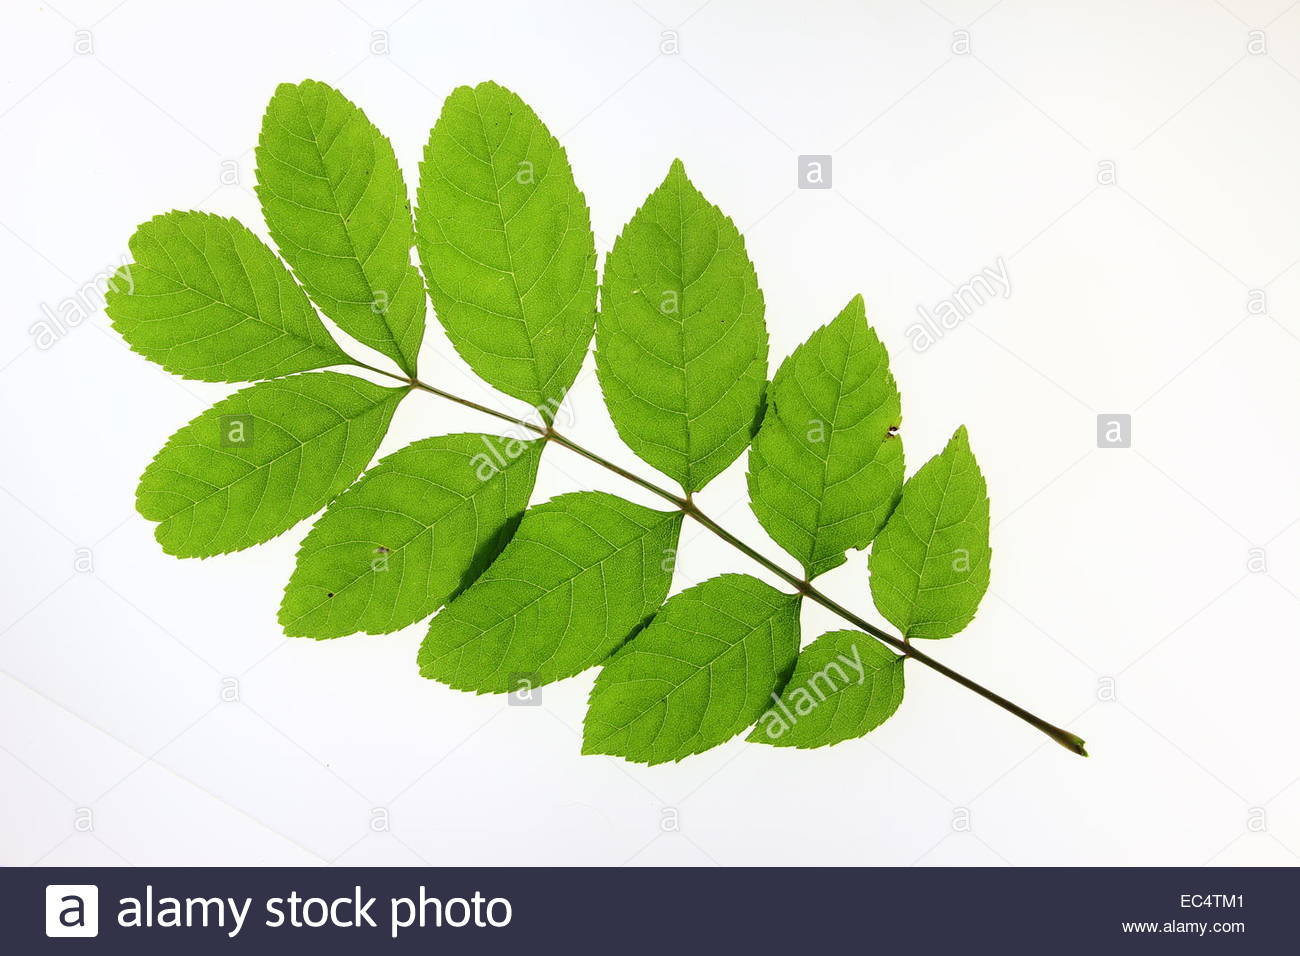 White Ash Leaf Stock Photos & White Ash Leaf Stock Images - Alamy